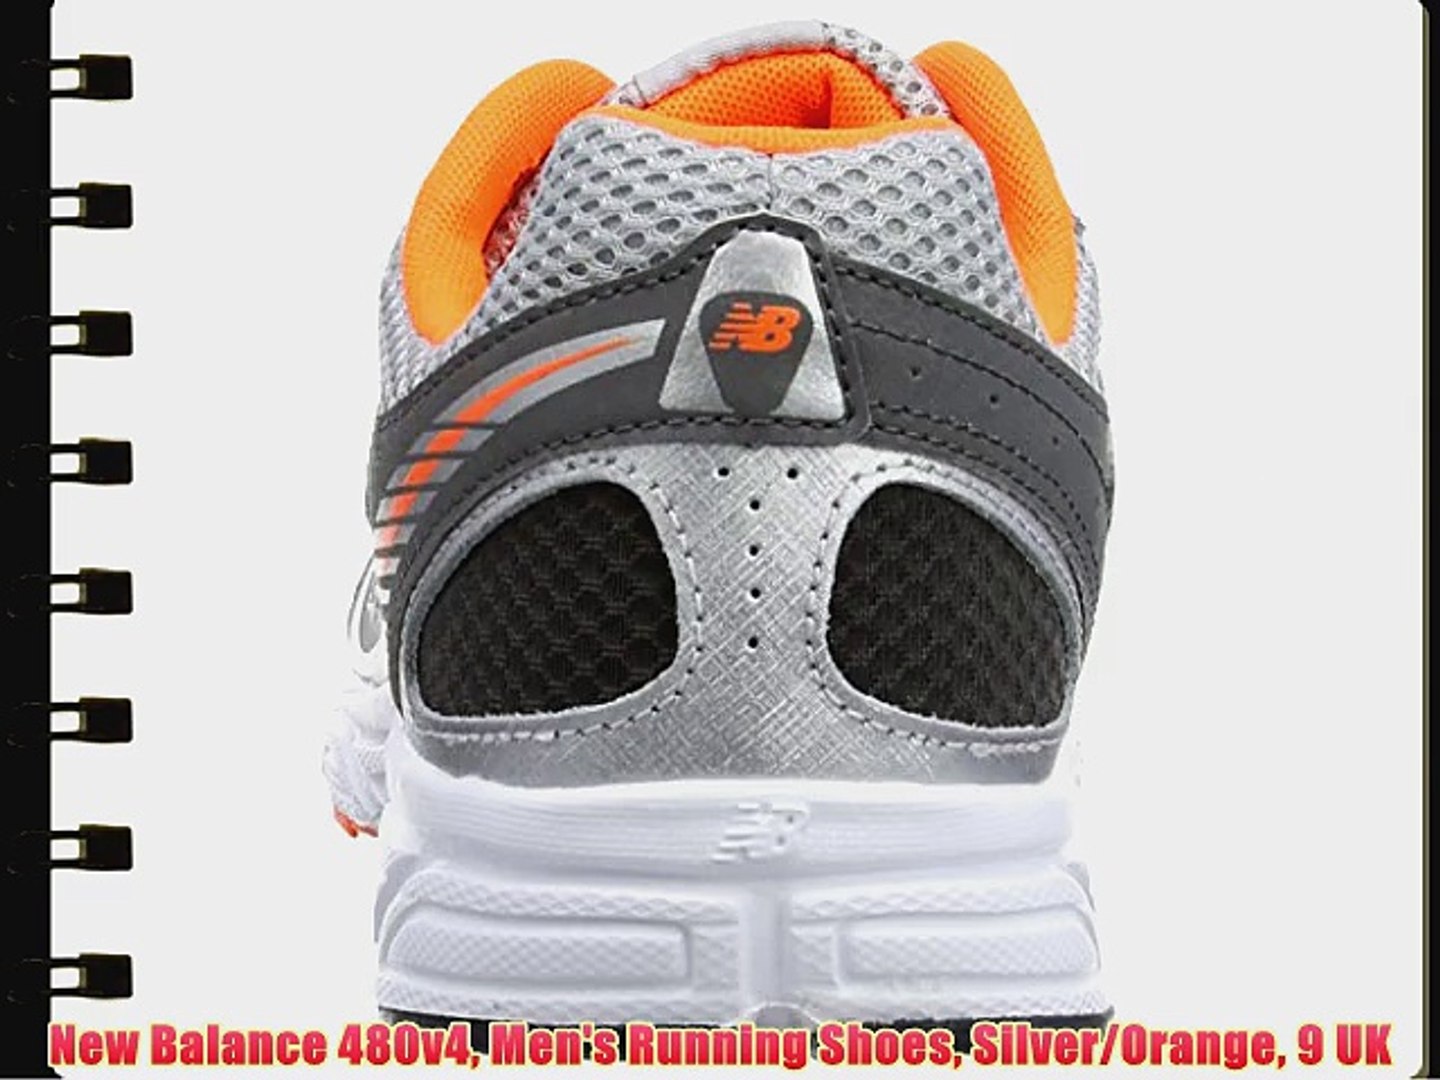 New Balance 480v4 Men's Running Shoes Silver/Orange 9 UK - video Dailymotion